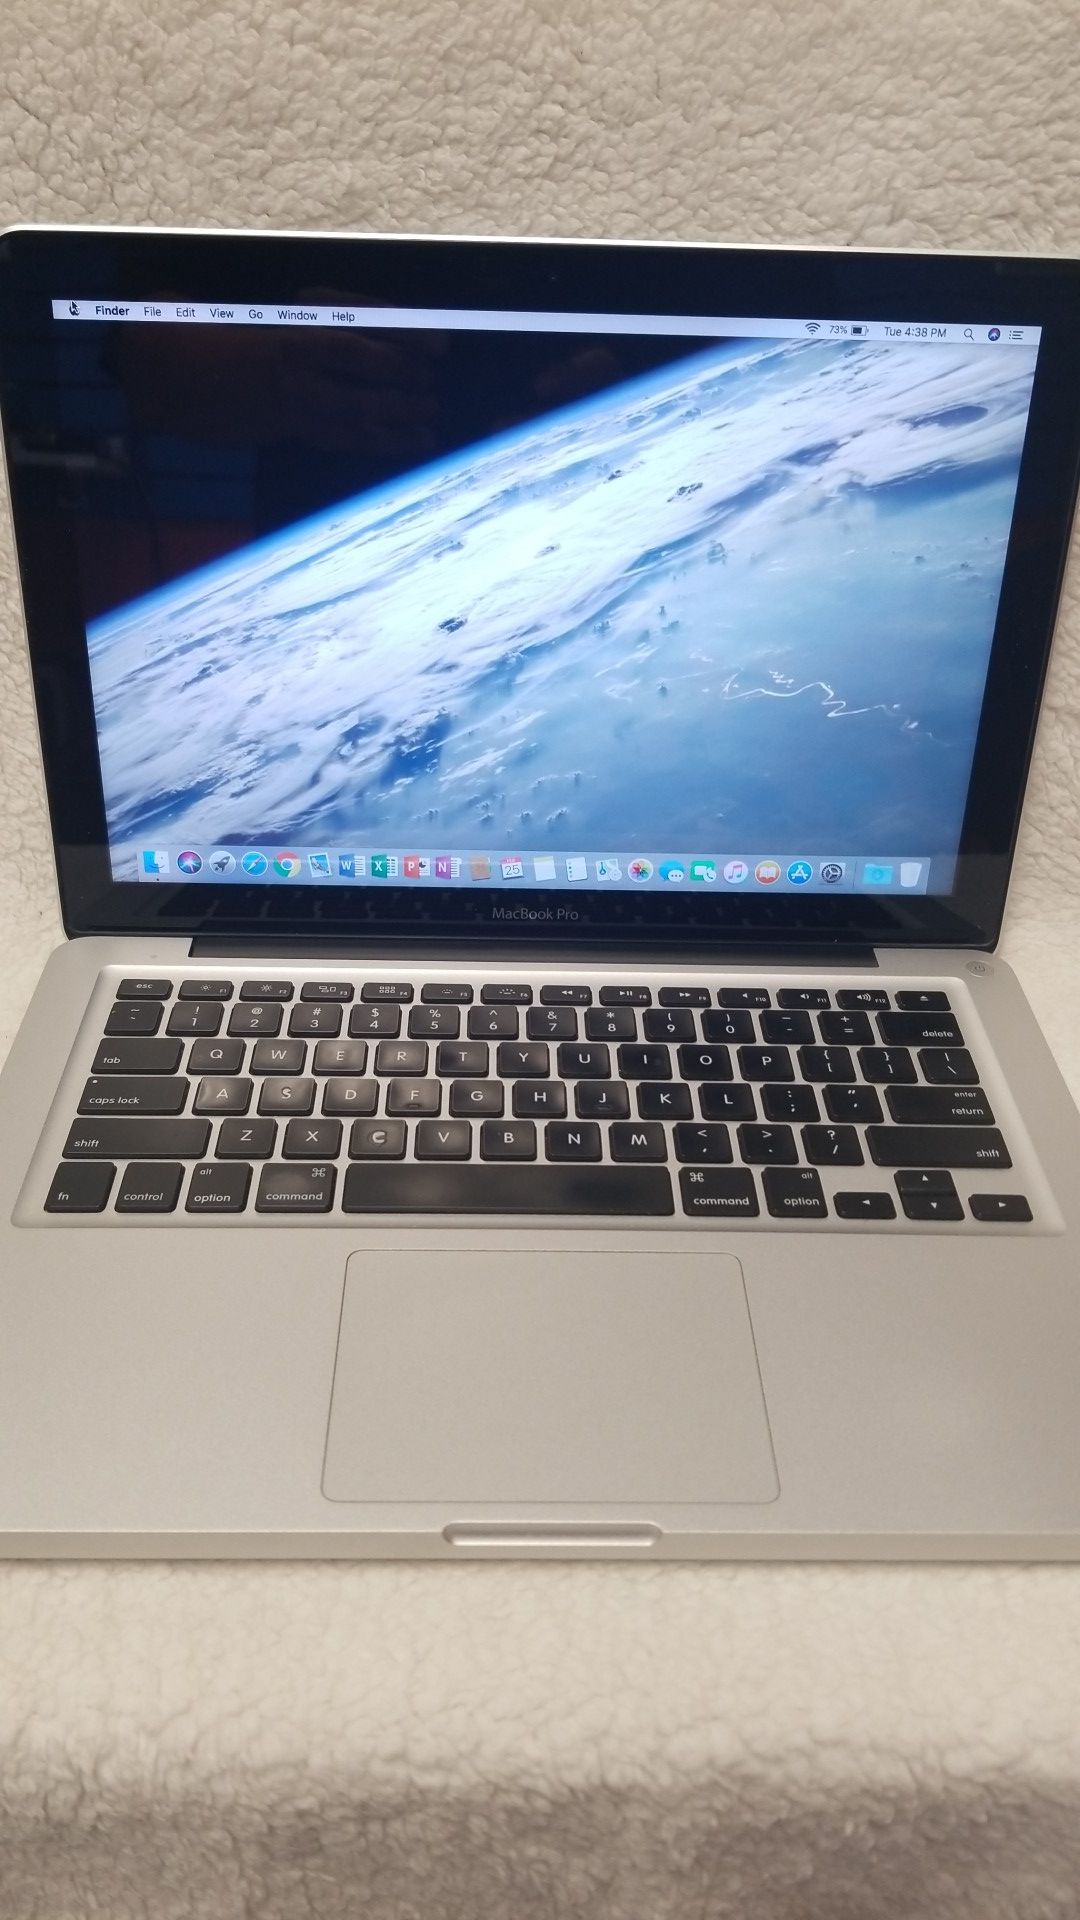 Apple Macbook Pro i5 512GB, 4GB, Laptop A1278